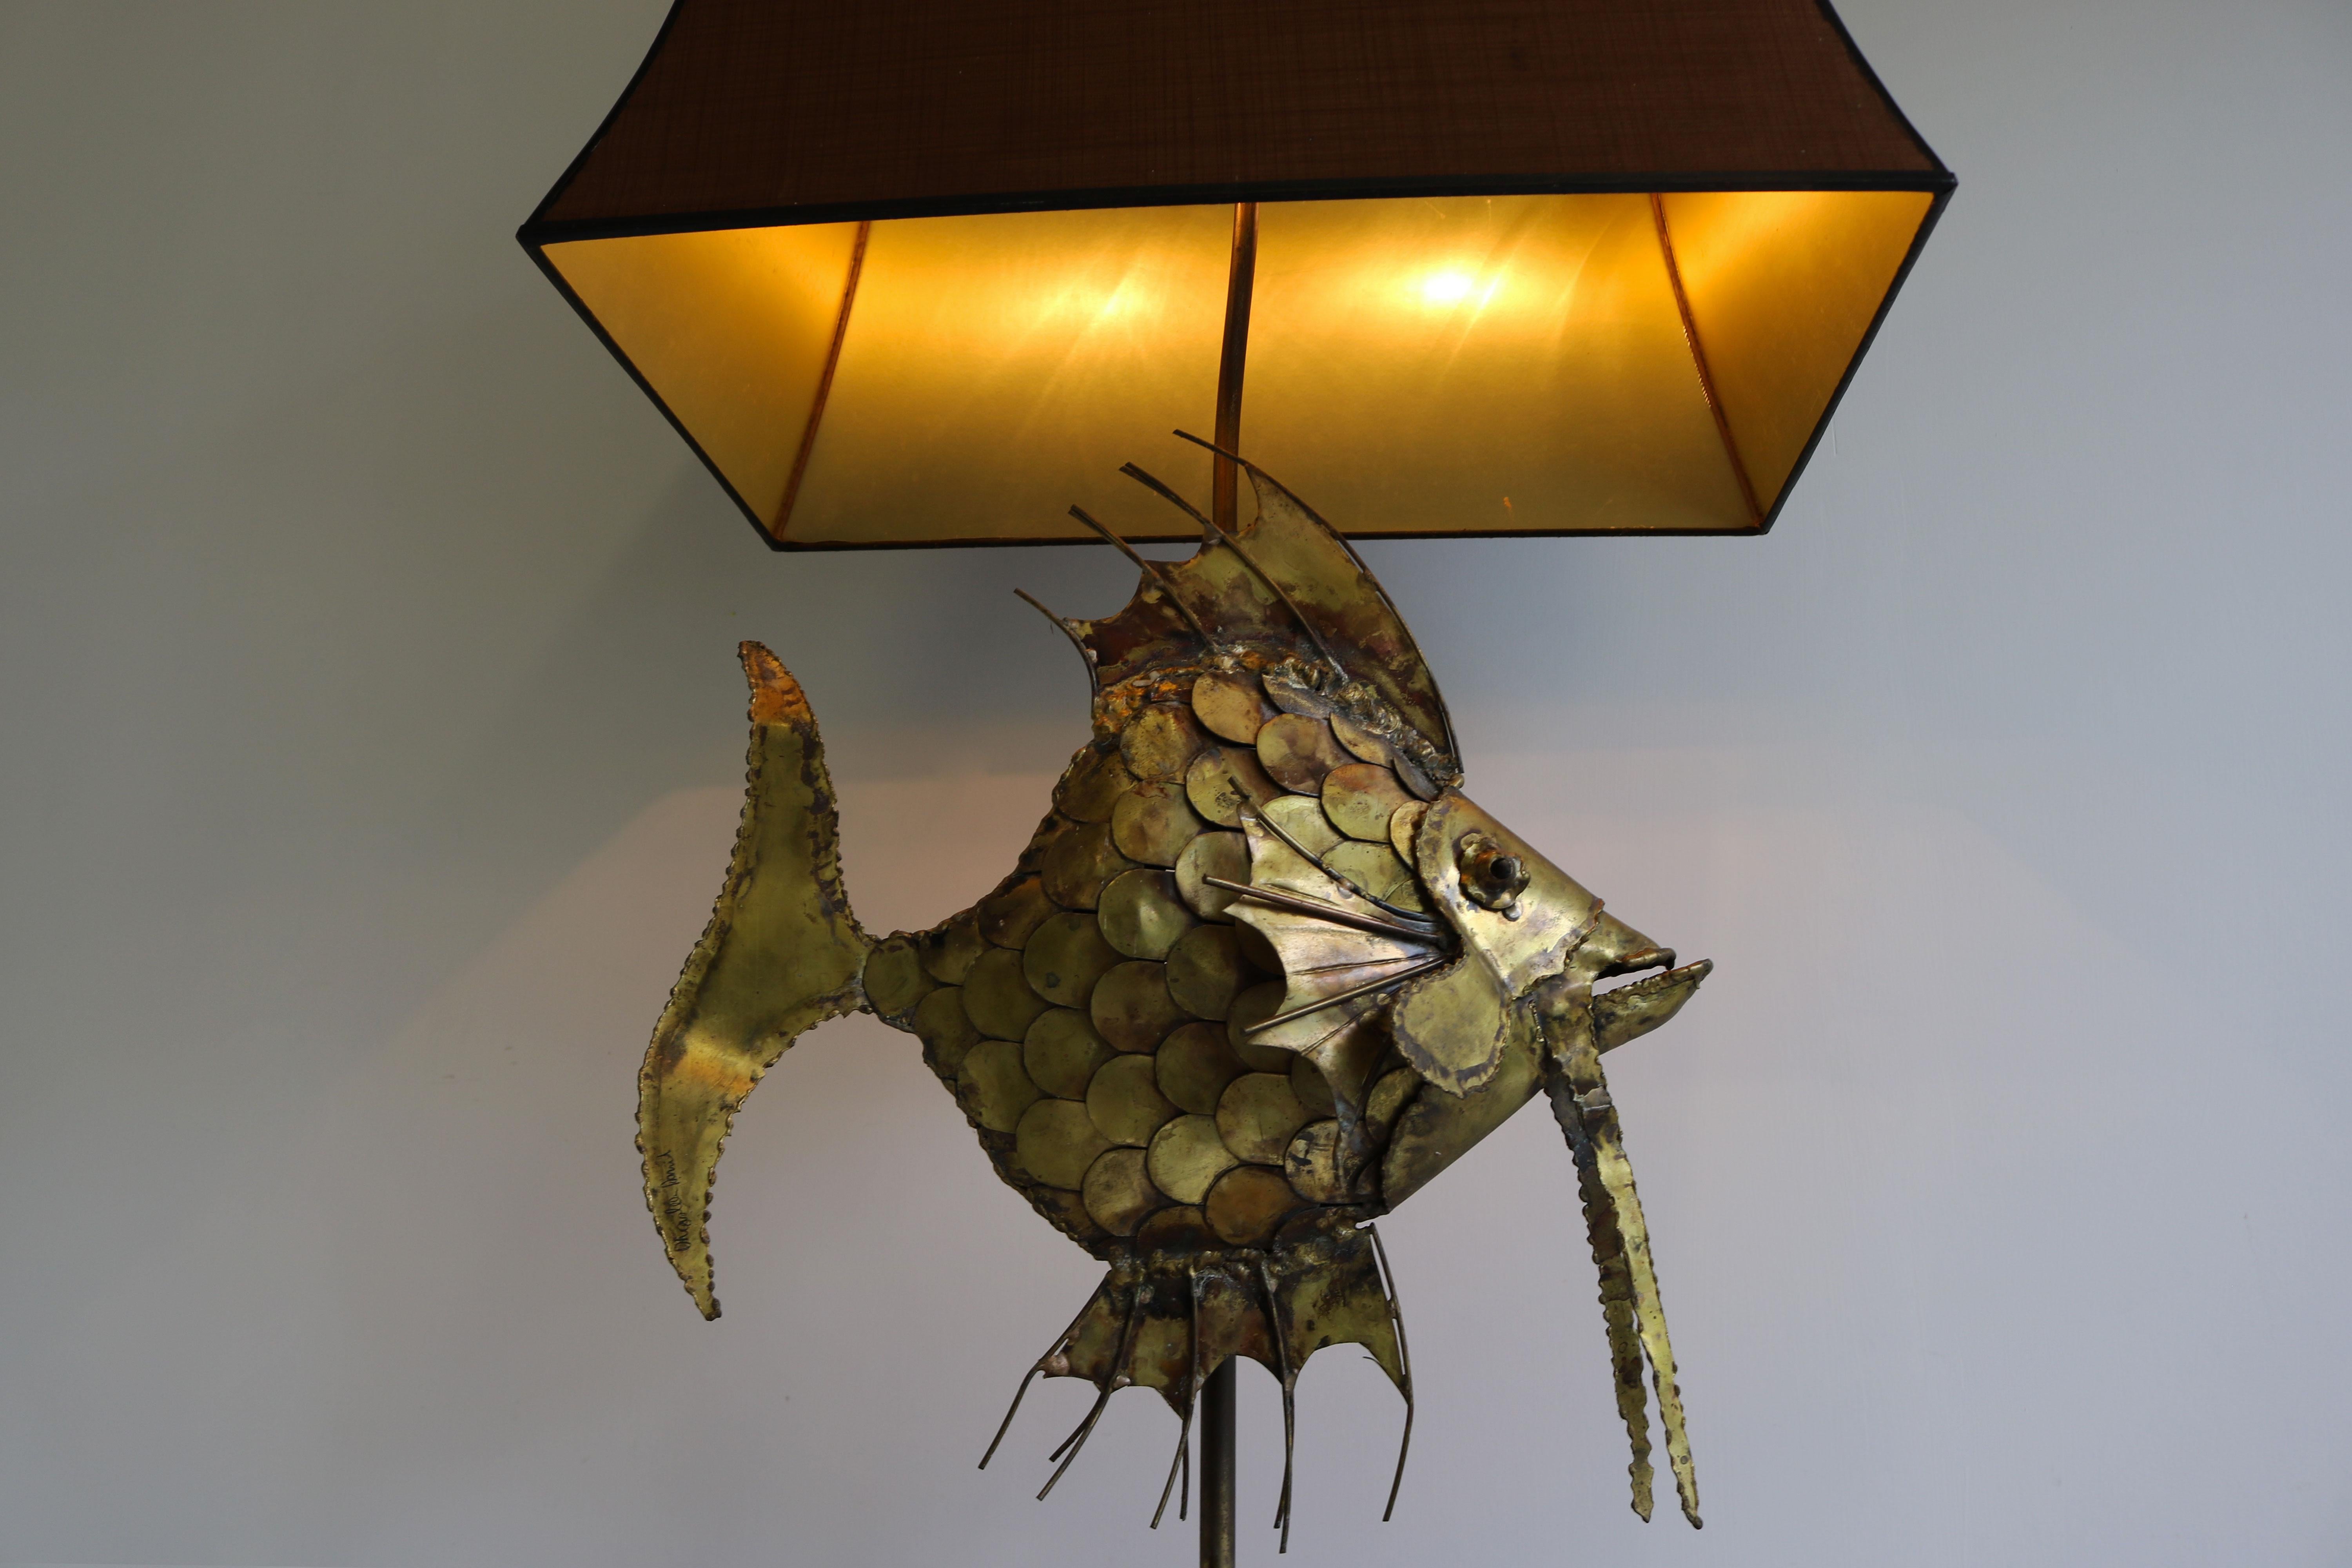 Belgian Design Brutalist Table Lamp in Brass by Daniel d'haeseleer 1970 Fish Sculpture For Sale